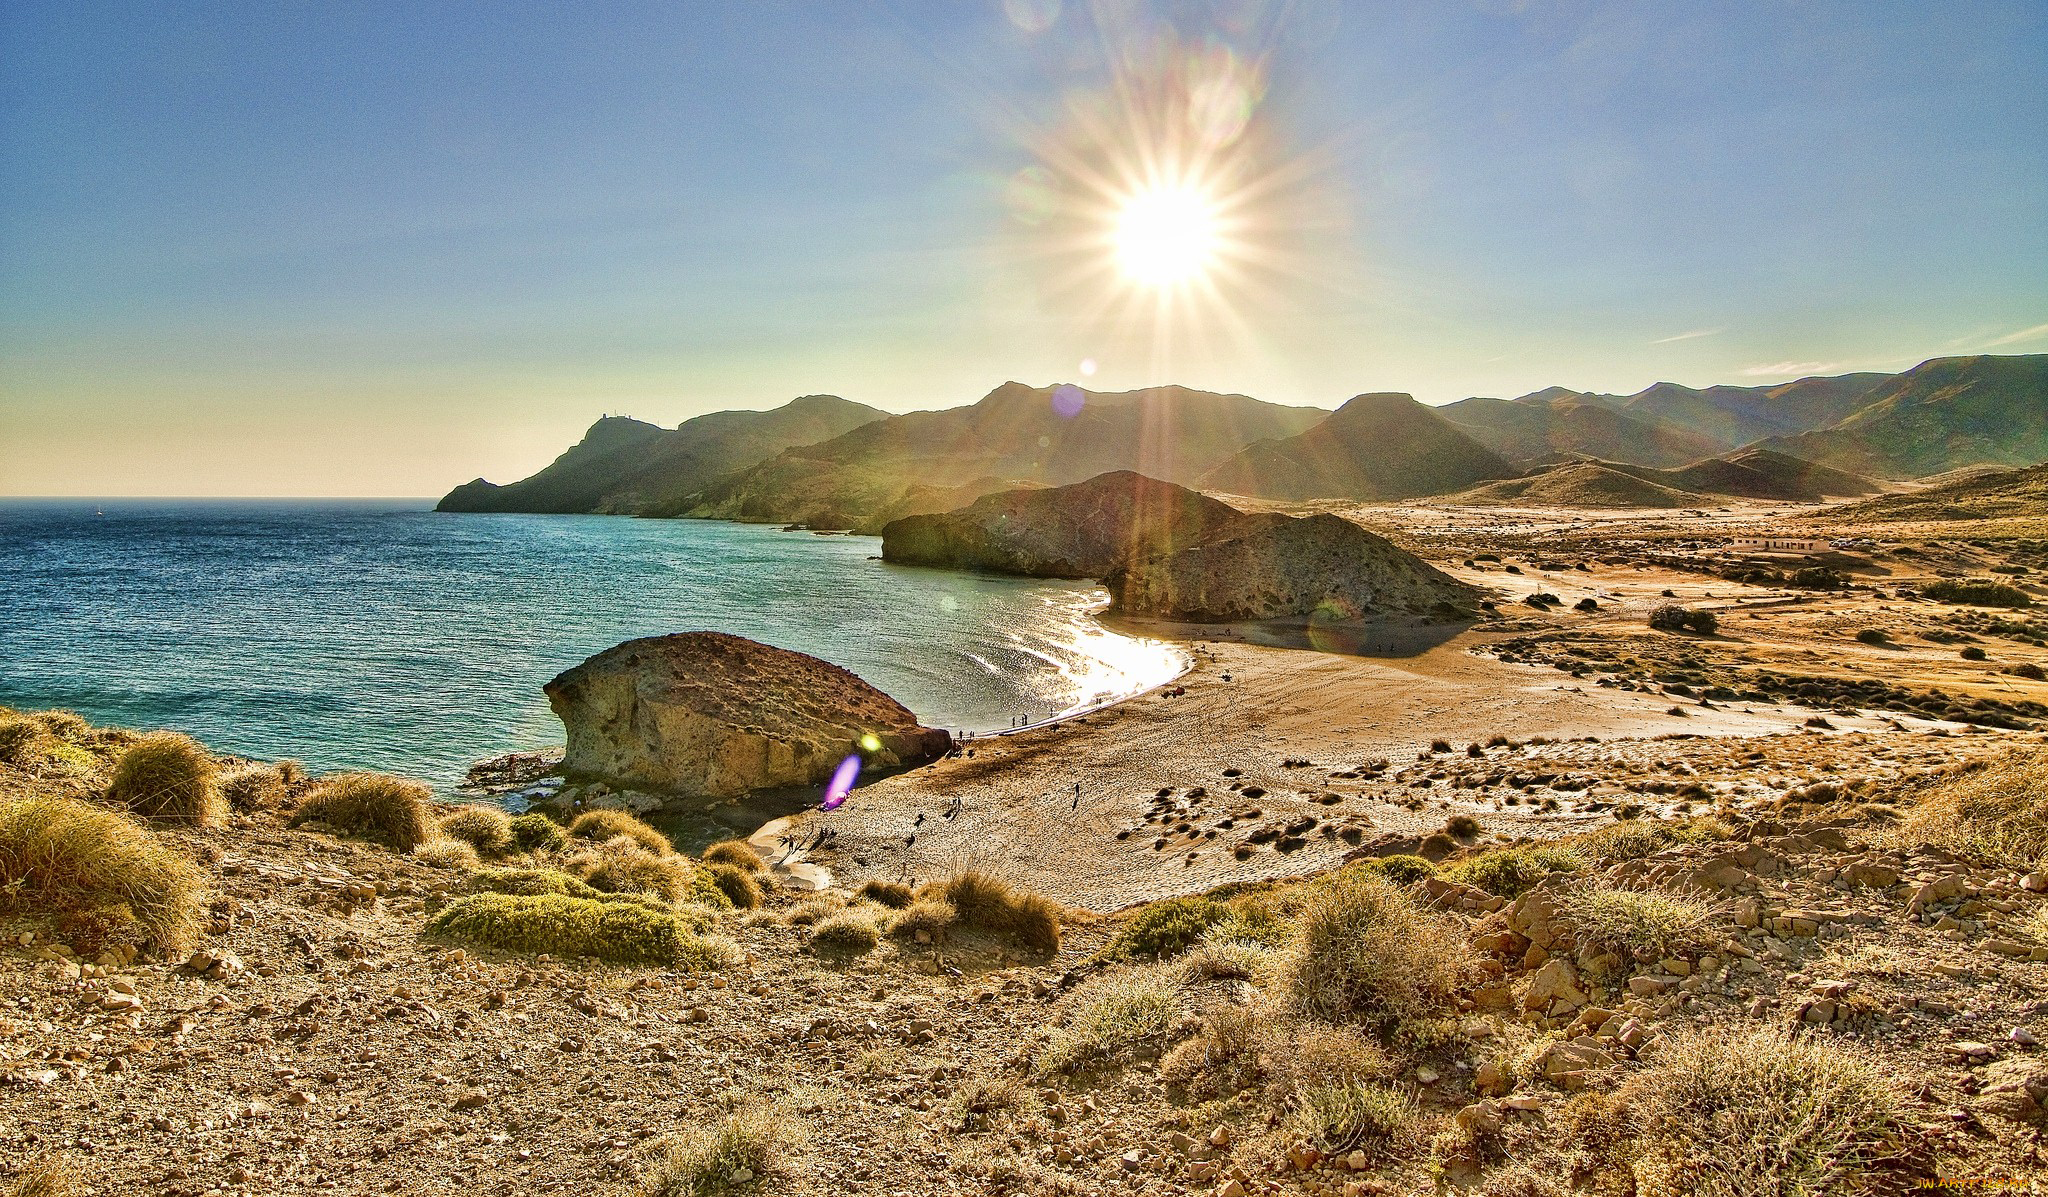 Coast like. Светлый пляж и горы. Палящее солнце на пляже. Фото Испания природа солнце. Пляжи с горами без растительности.